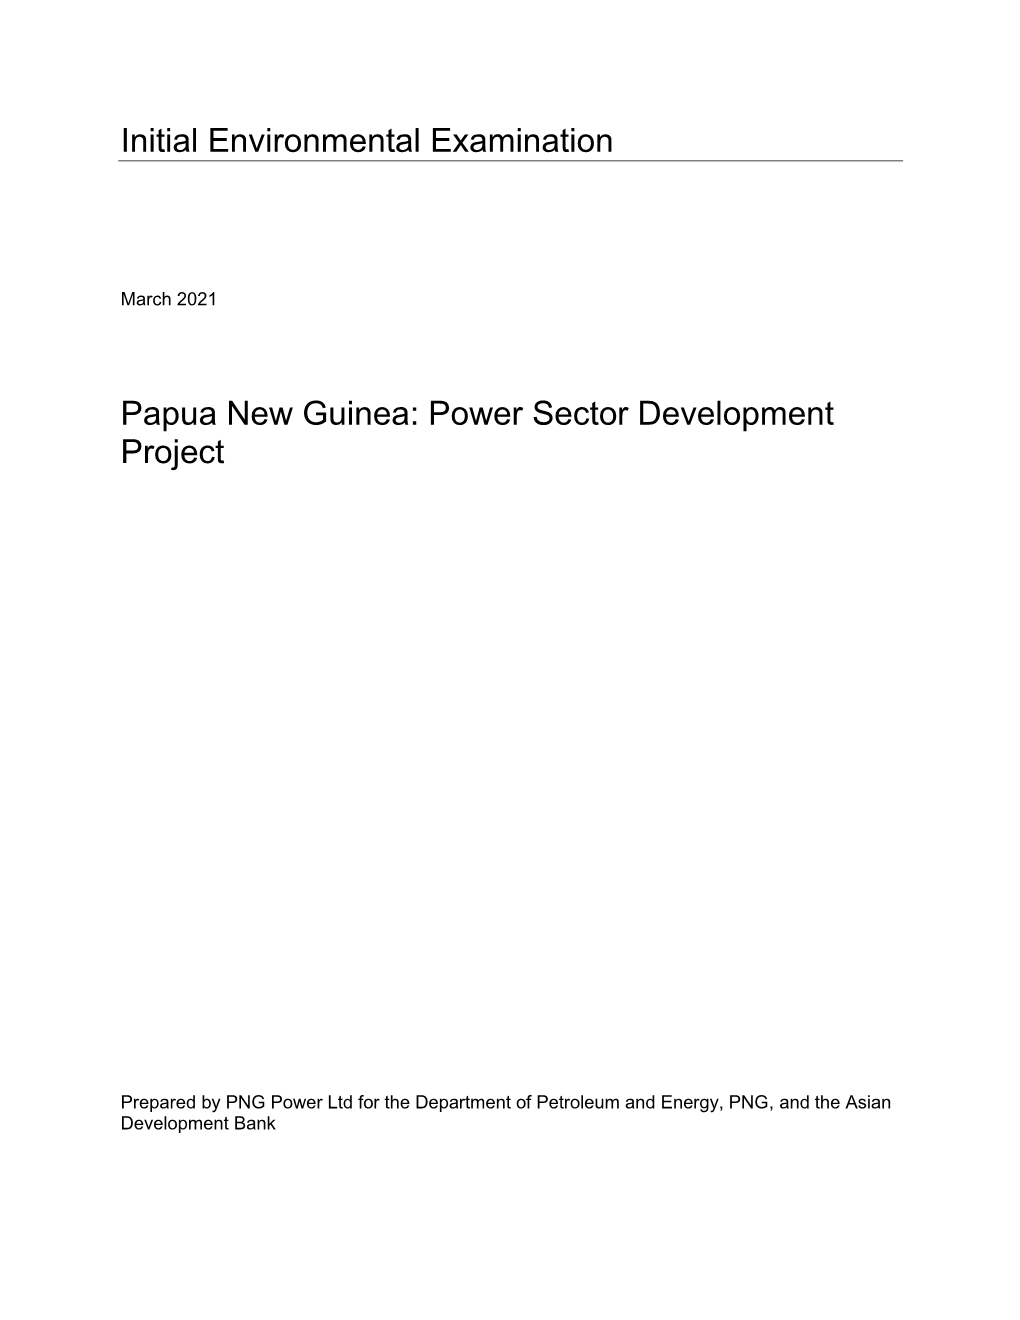 47356-002: Power Sector Development Investment Program